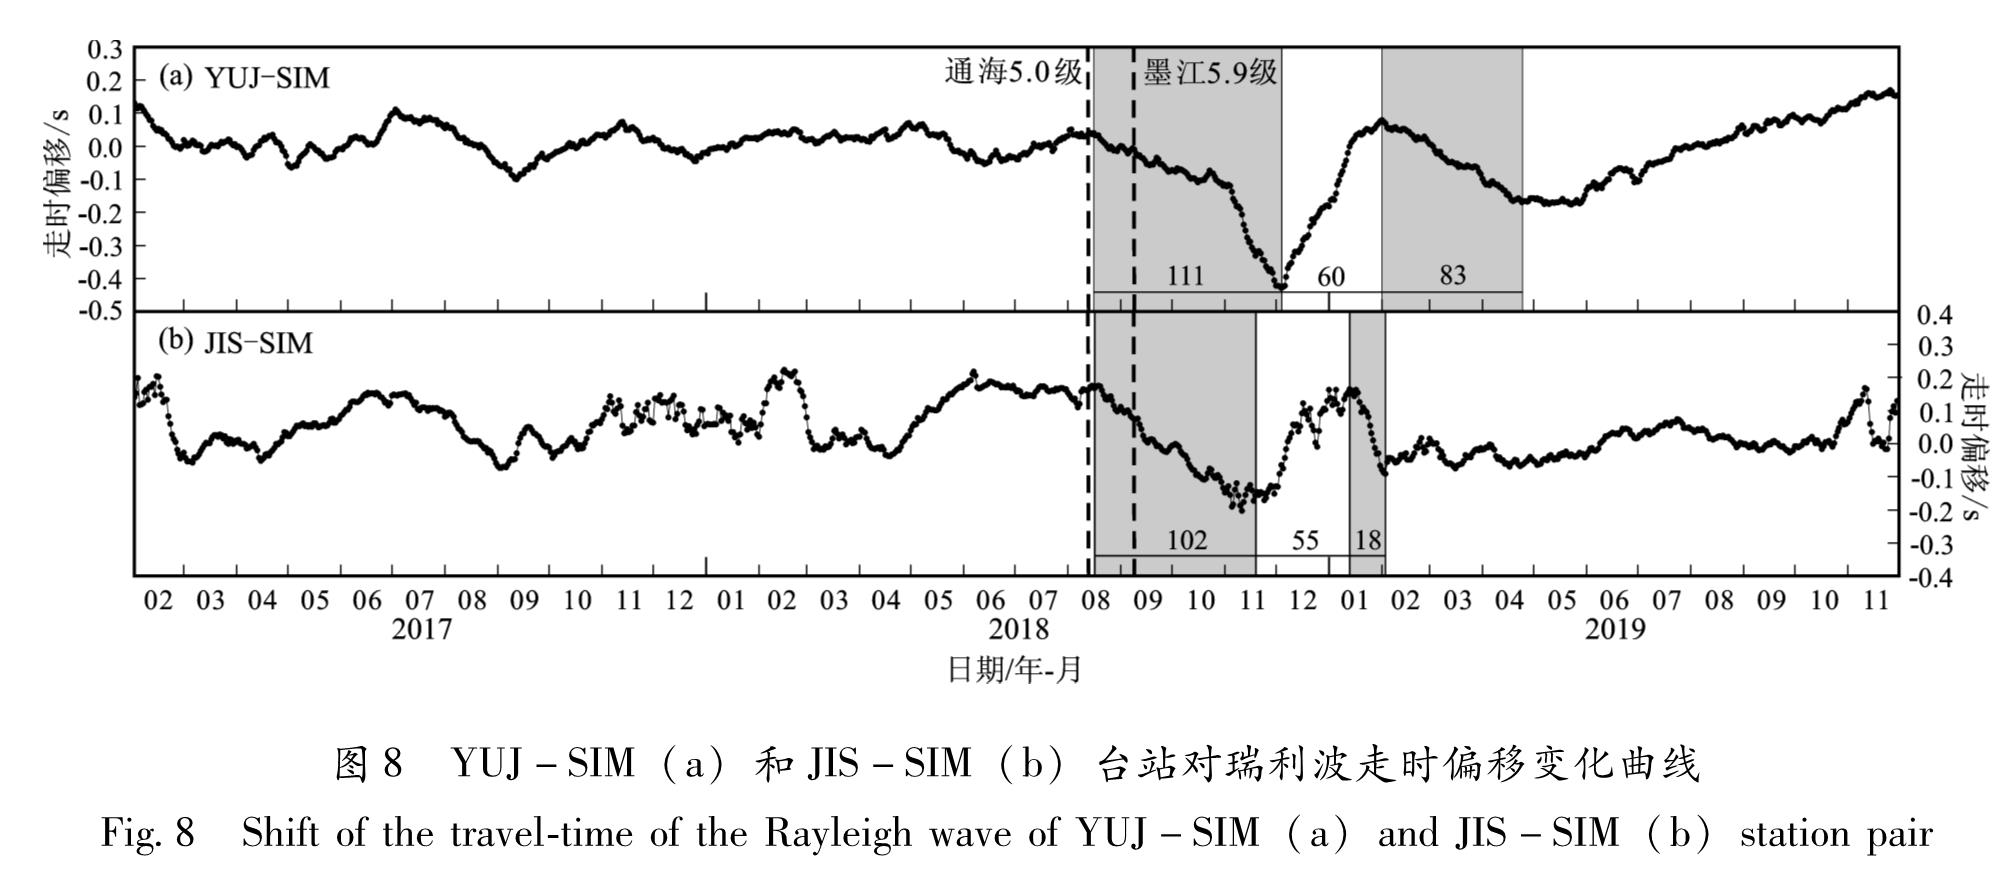 图8 YUJ-SIM(a)和JIS-SIM(b)台站对瑞利波走时偏移变化曲线<br/>Fig.8 Shift of the travel-time of the Rayleigh wave of YUJ-SIM(a)and JIS-SIM(b)station pair